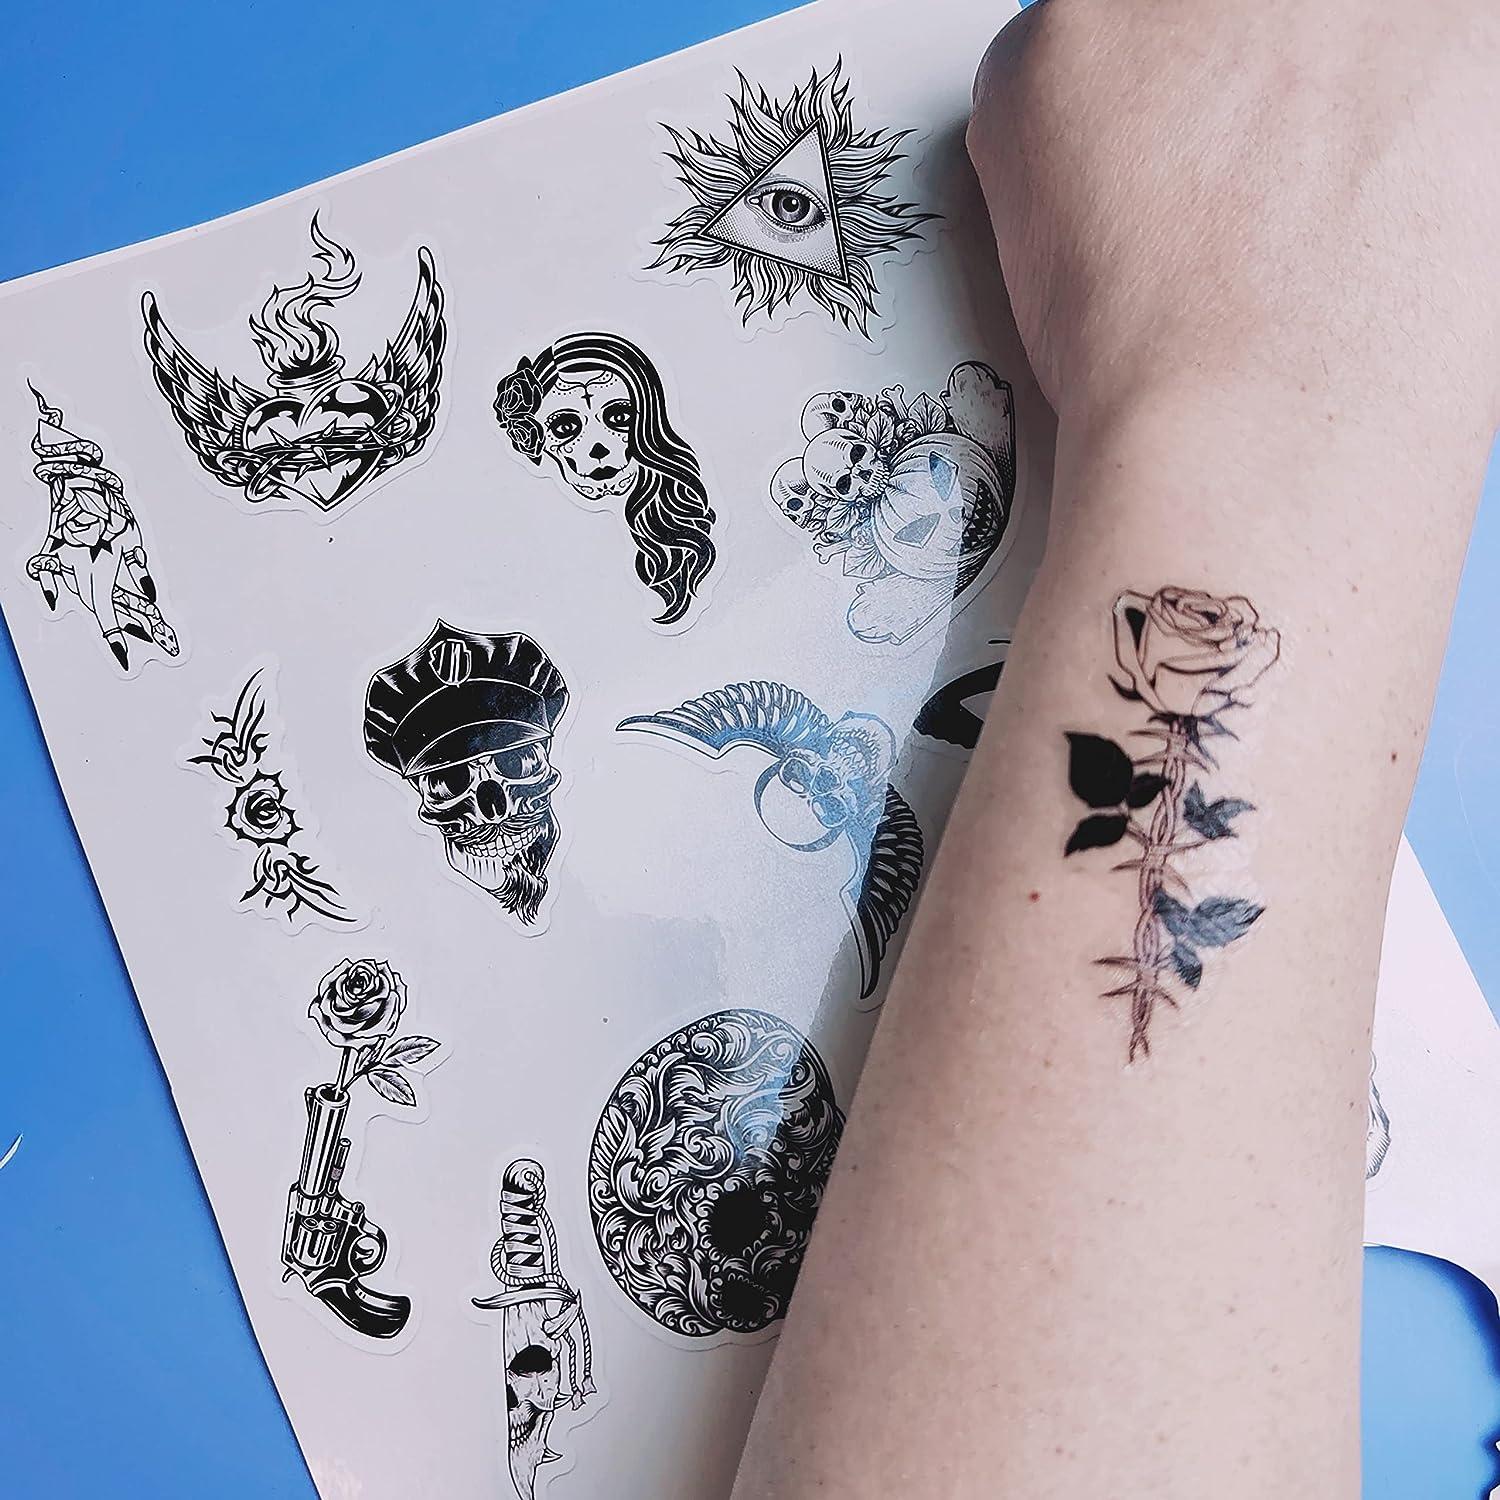 Temporary Tattoo INKJET PRINTER transfer Decal Paper 11 x 17